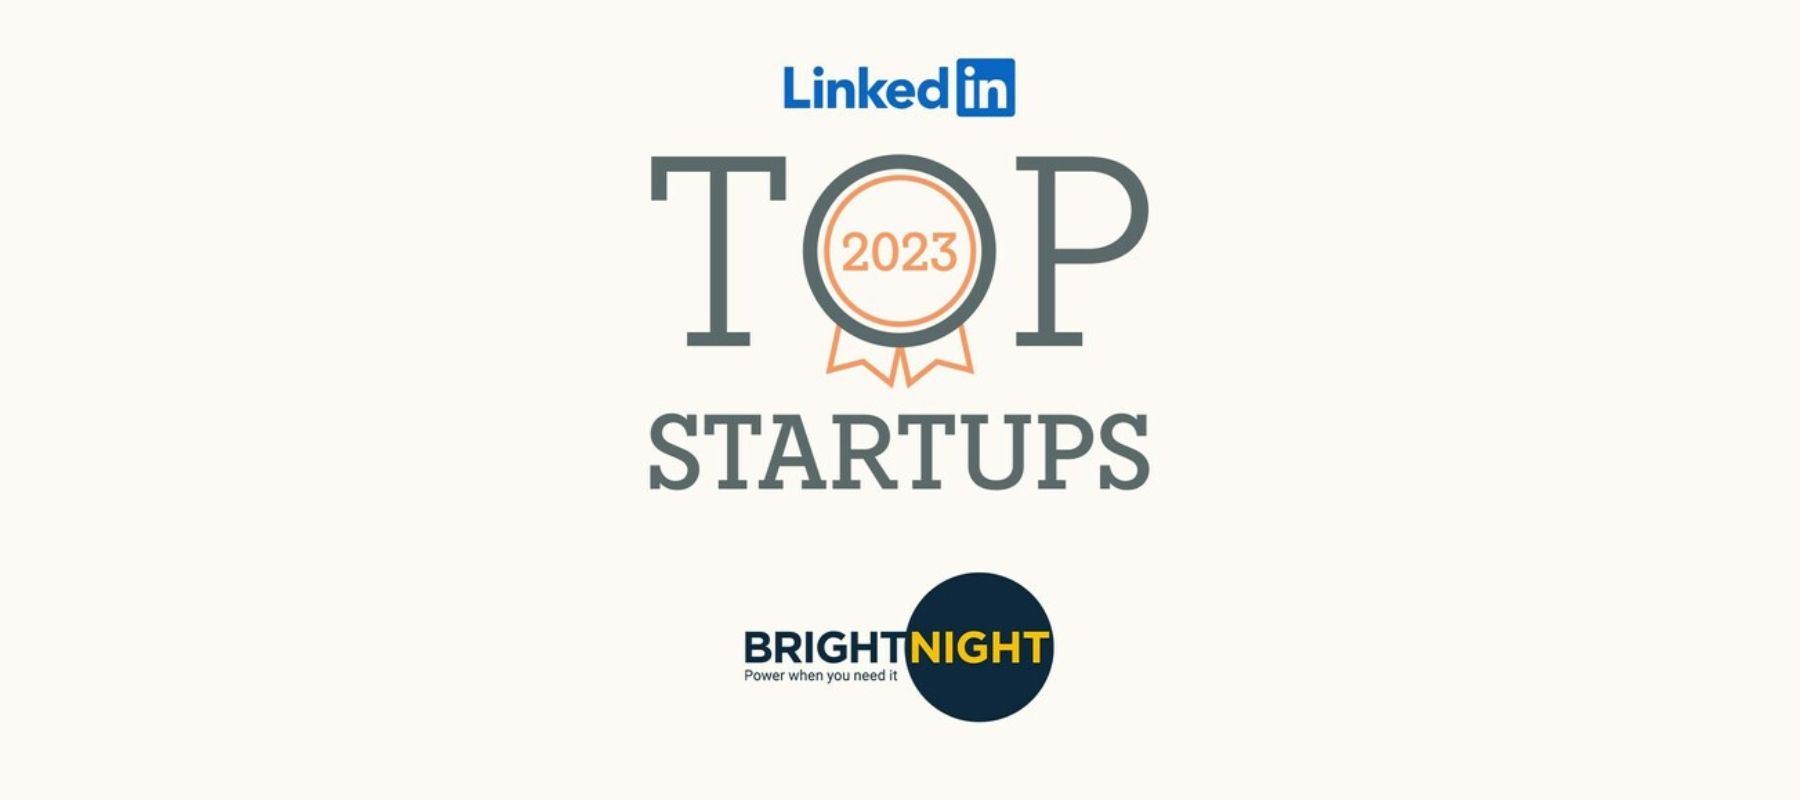 LinkedIn names renewable power producer BrightNight as top U.S. startup